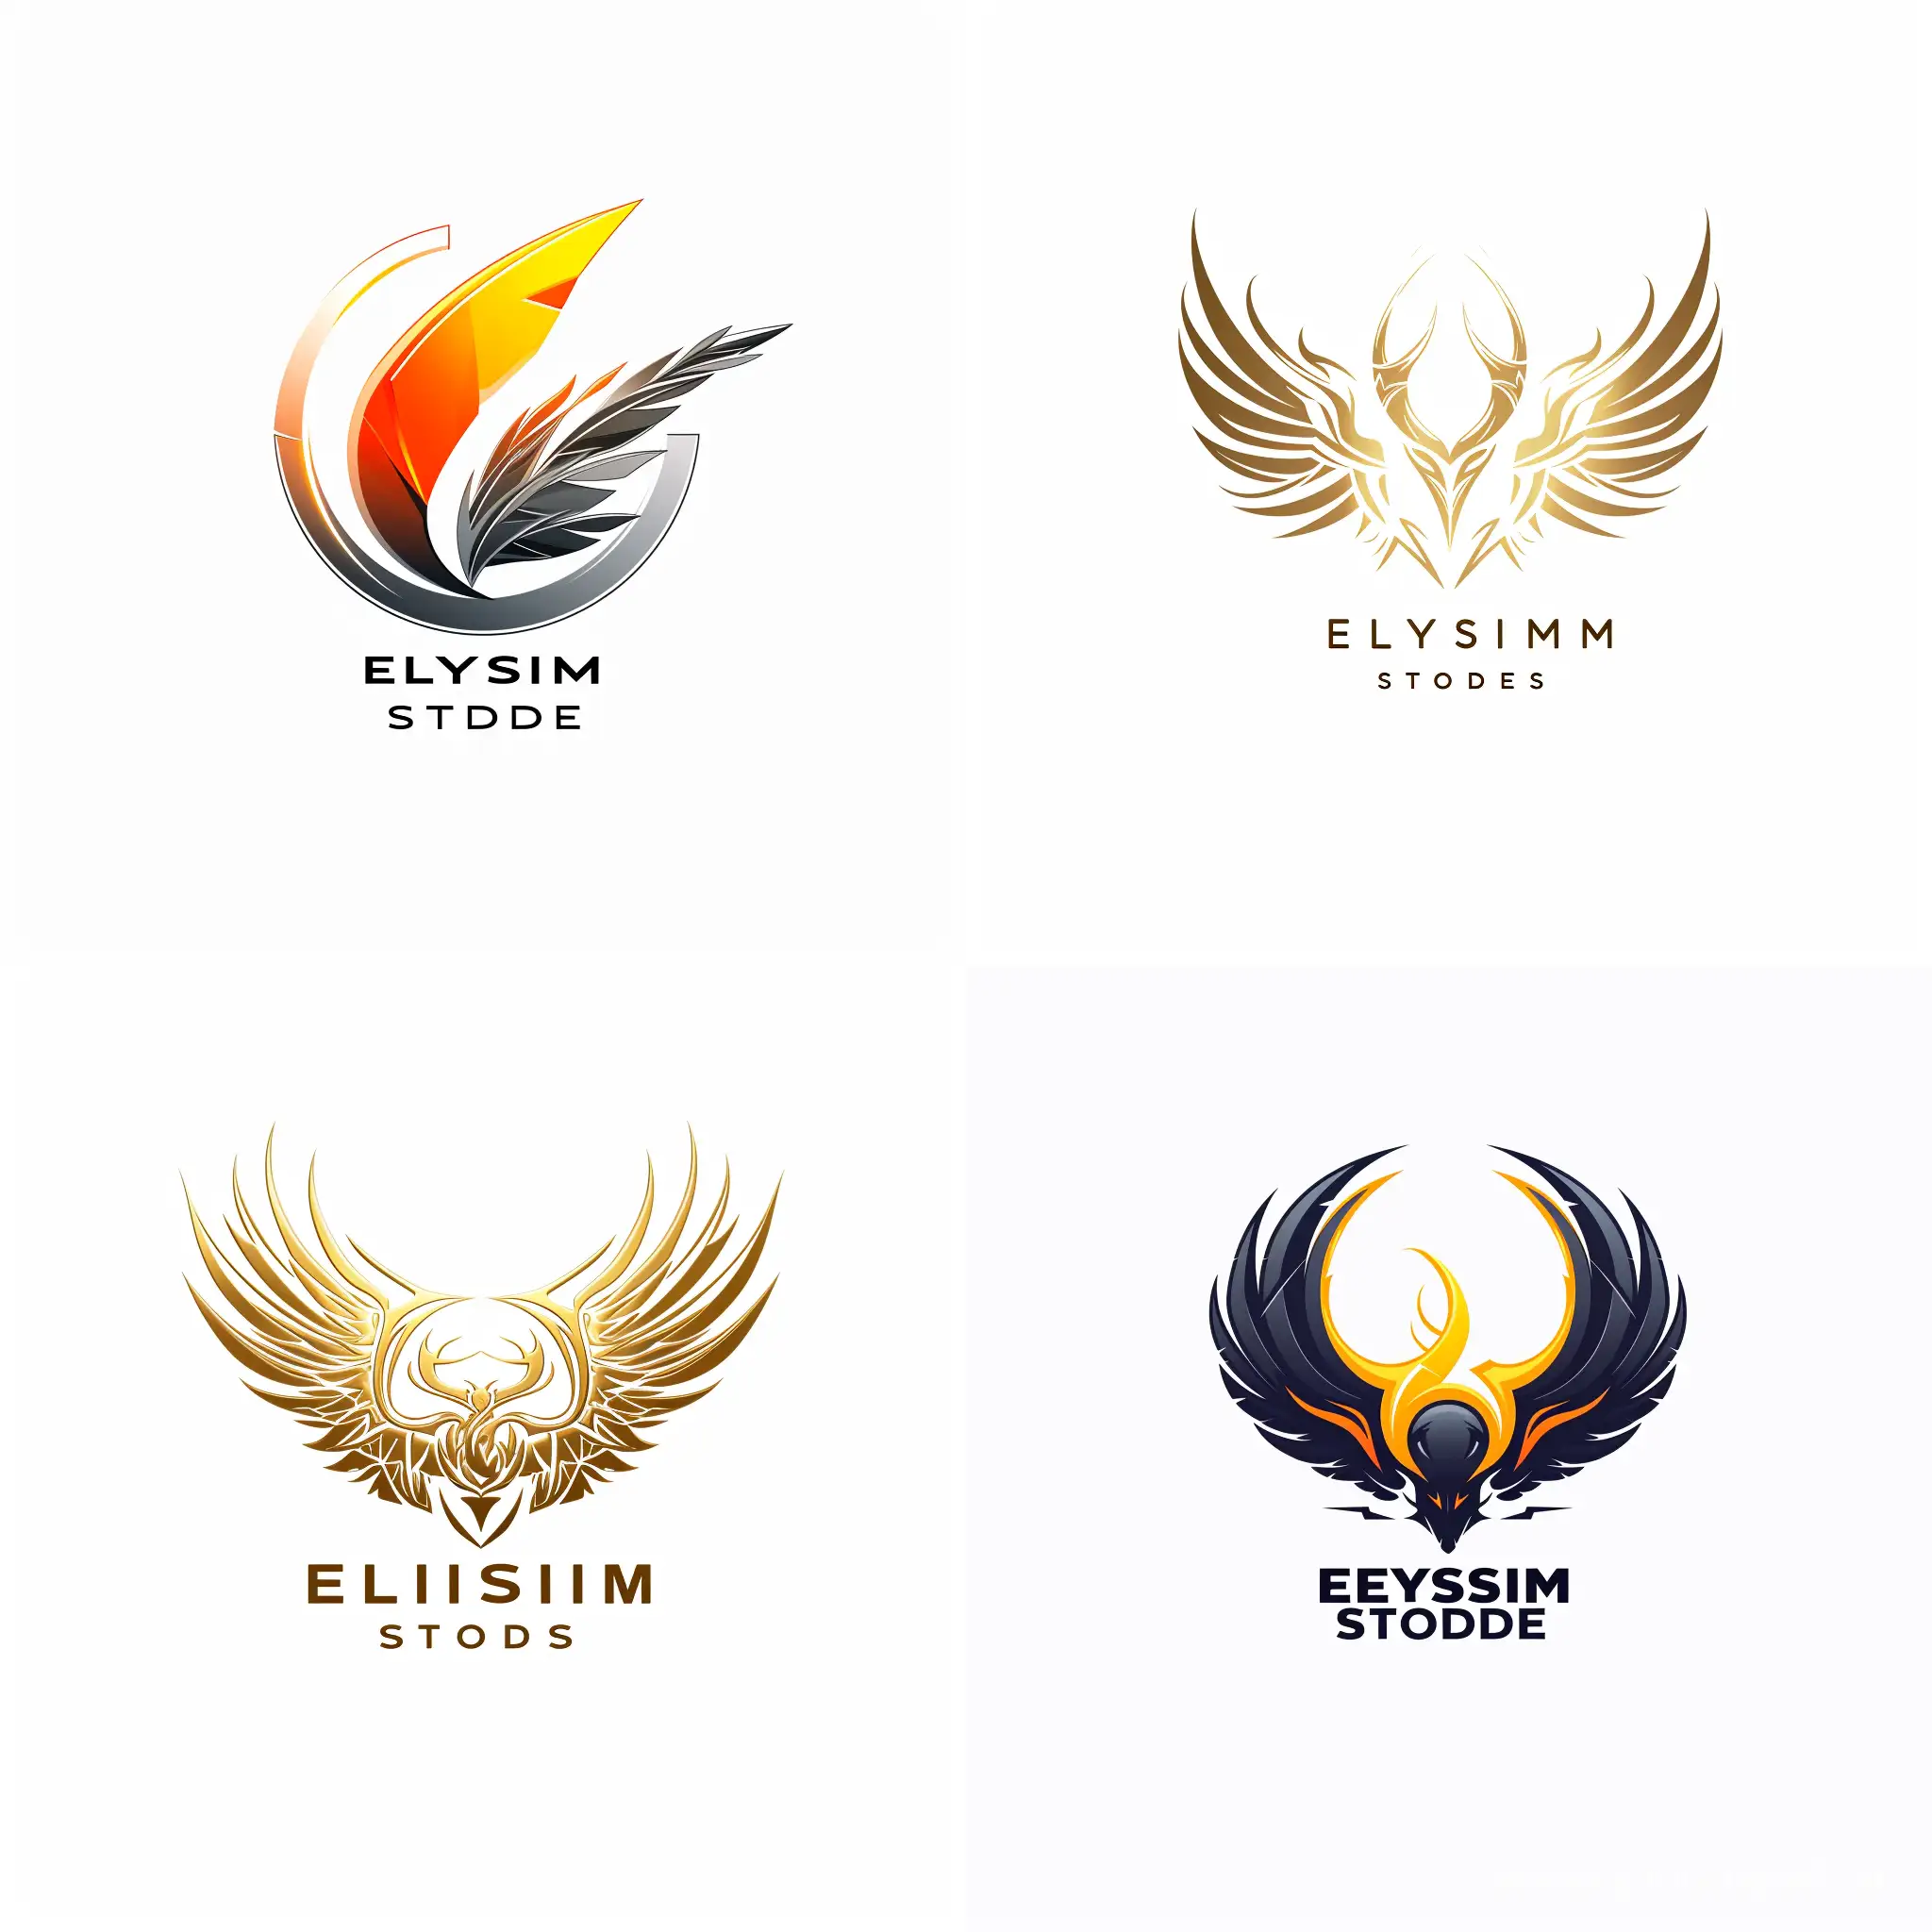 Innovative-Marketing-Design-Logo-by-Elysium-Studios-White-Background